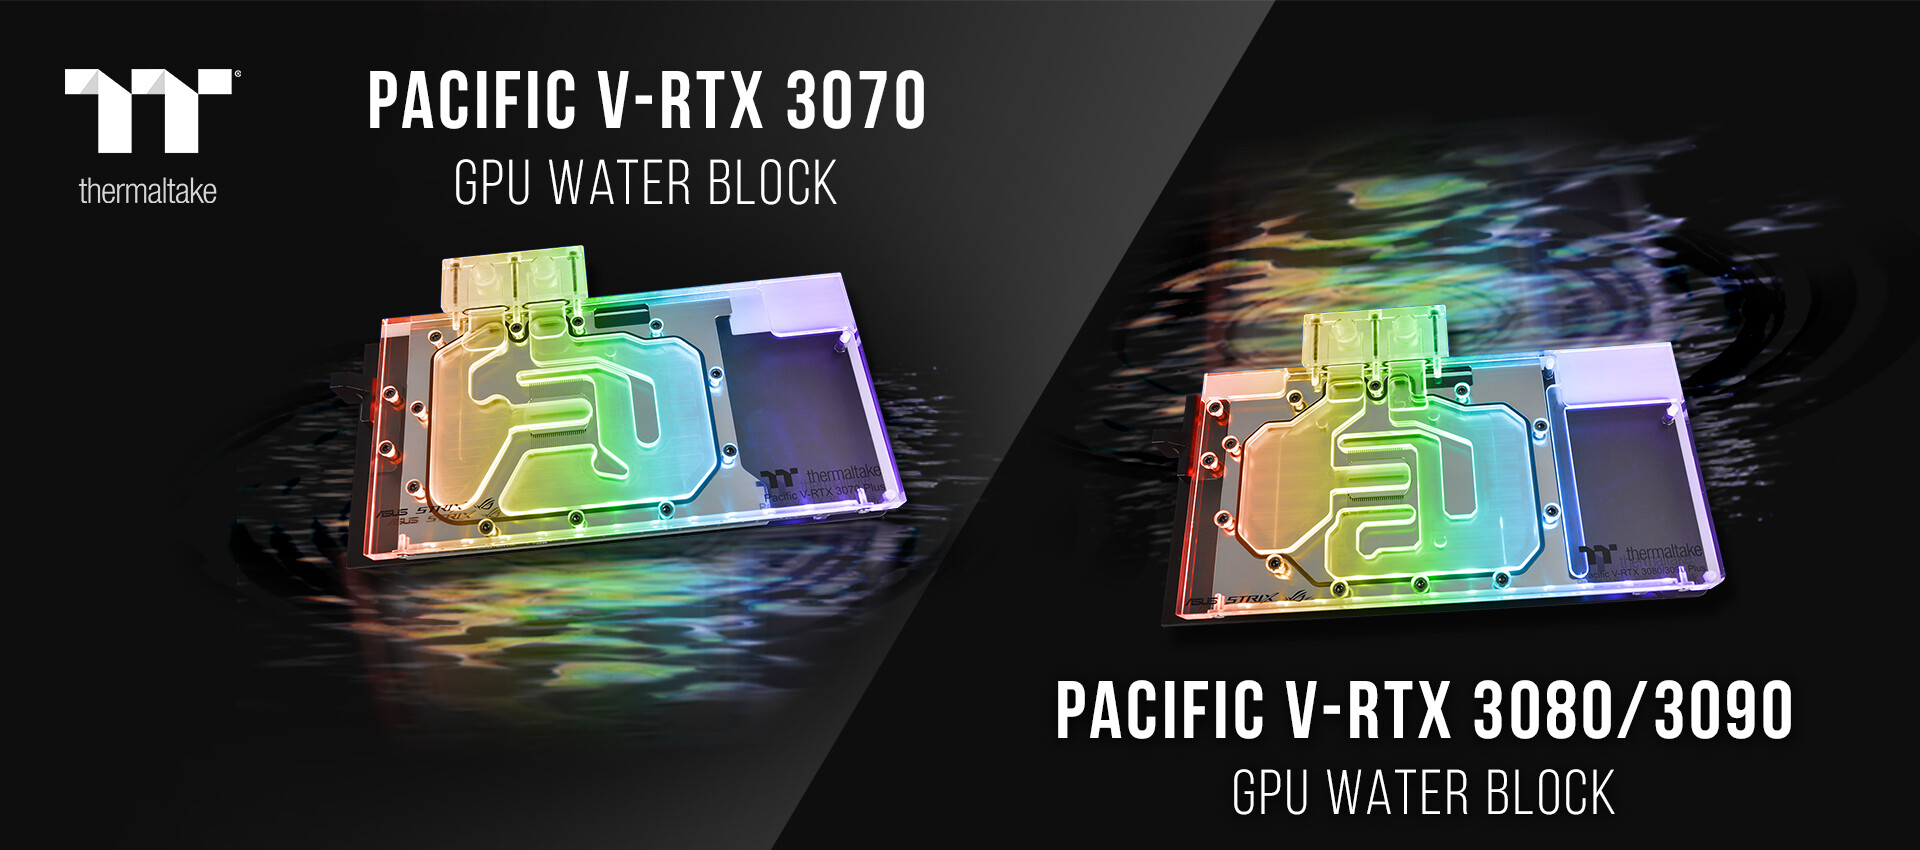 Pacific V-RTX 4080 Plus (ASUS ROG & TUF) GPU Water Block